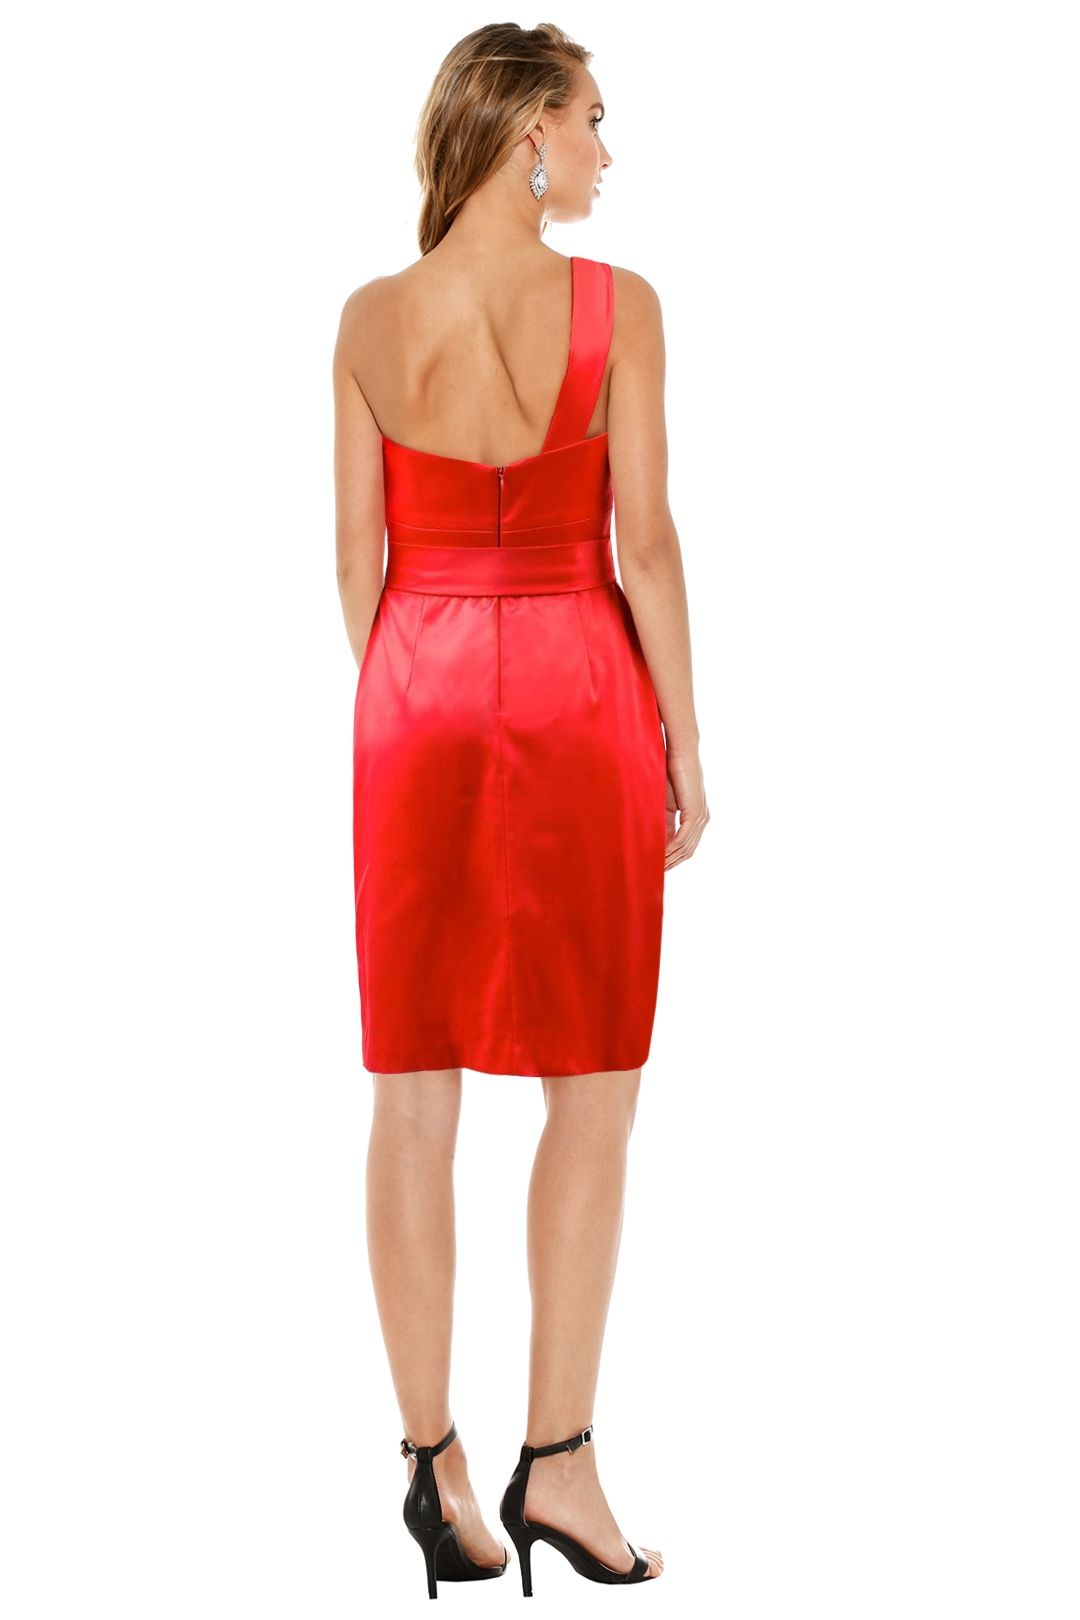 Matthew Eager - Miama Dress - Red - Back